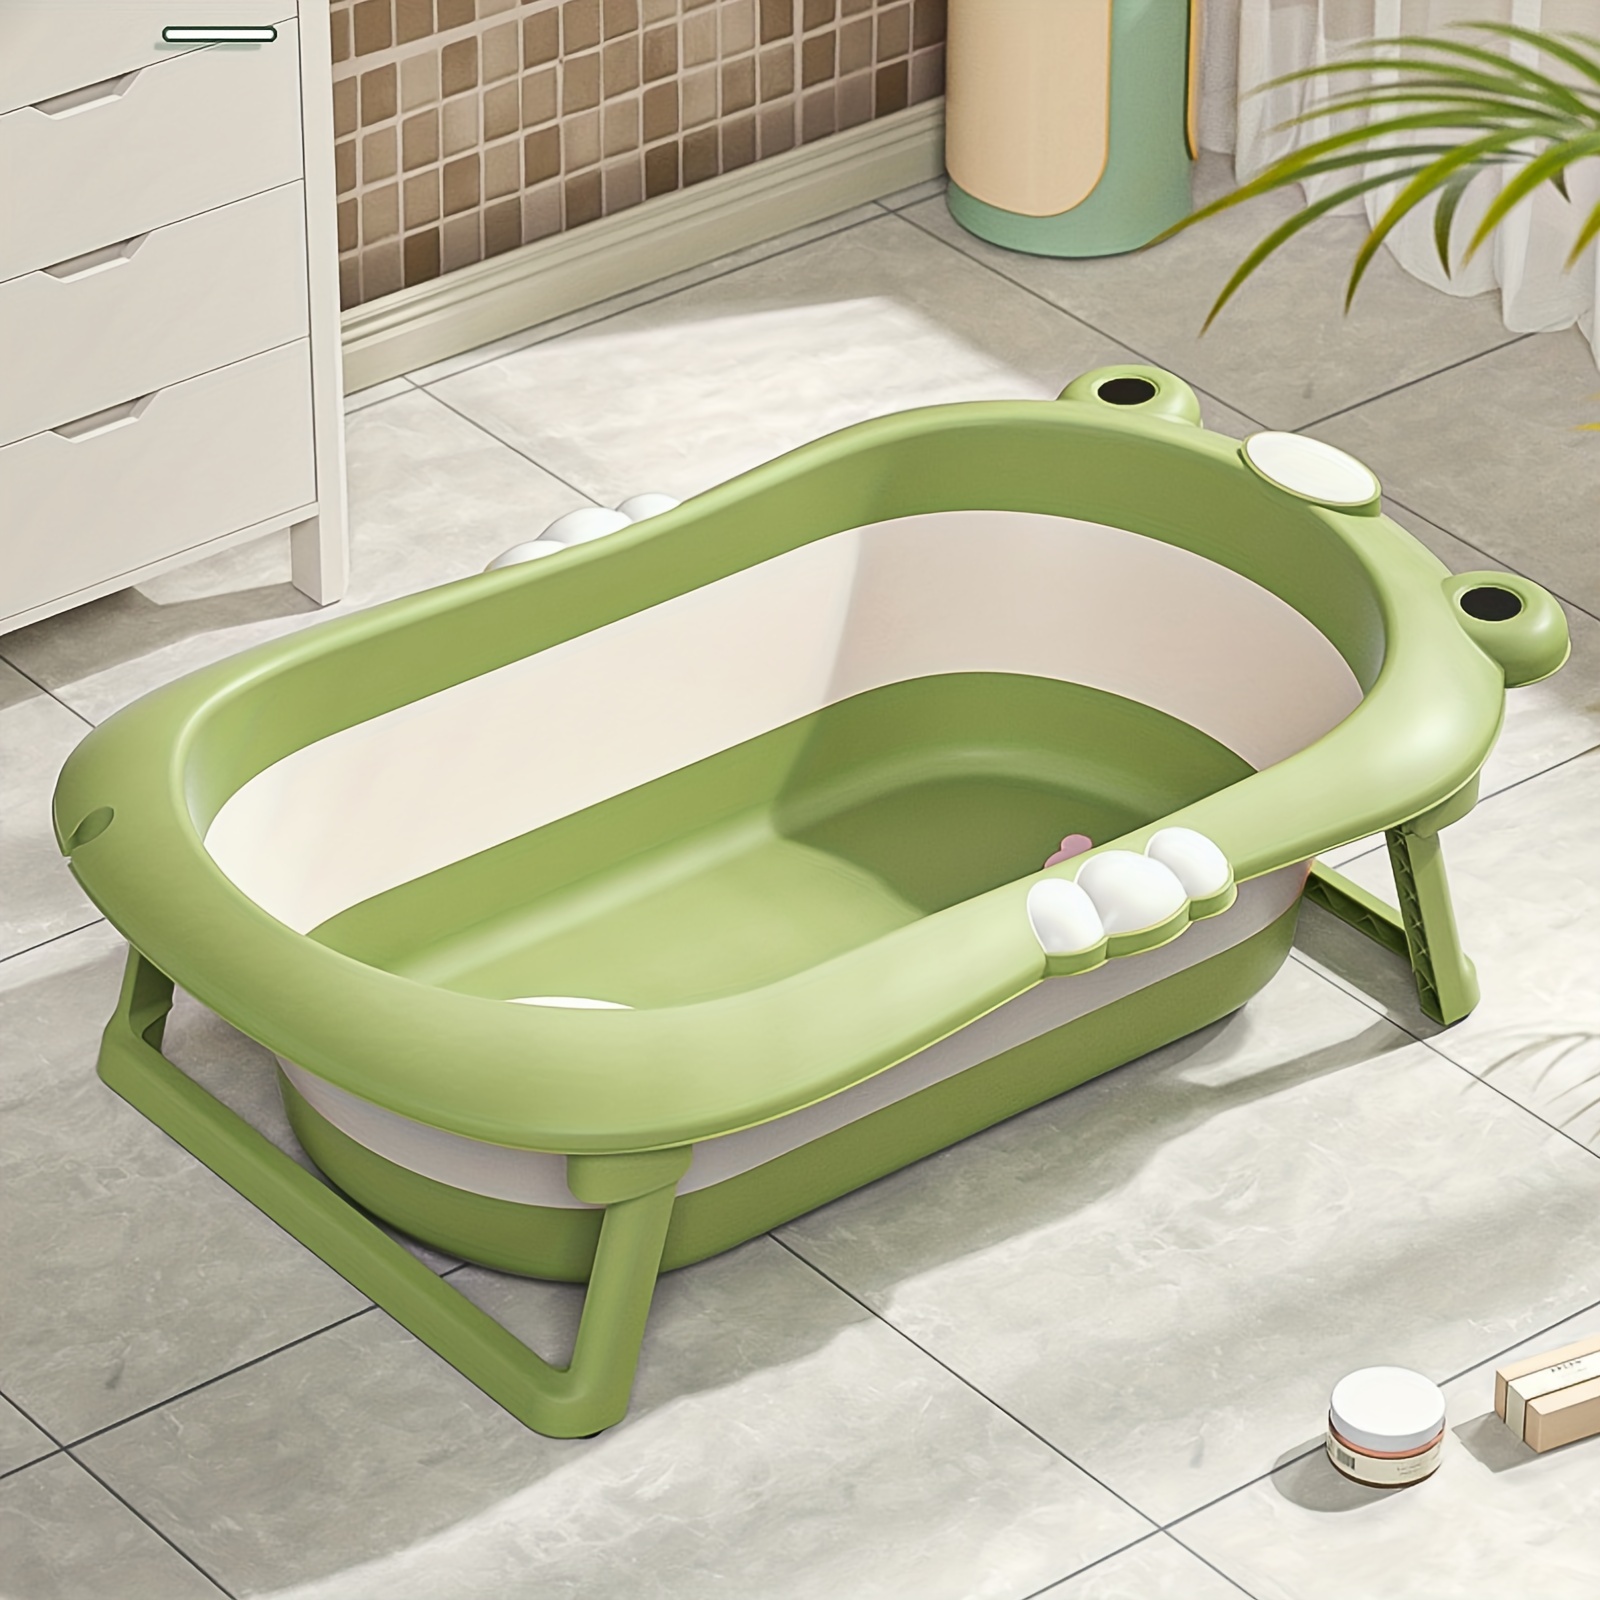 Bañera hinchable plegable para adultos, bañera portátil plegable, bañera  para adultos (rosa) : : Bebé